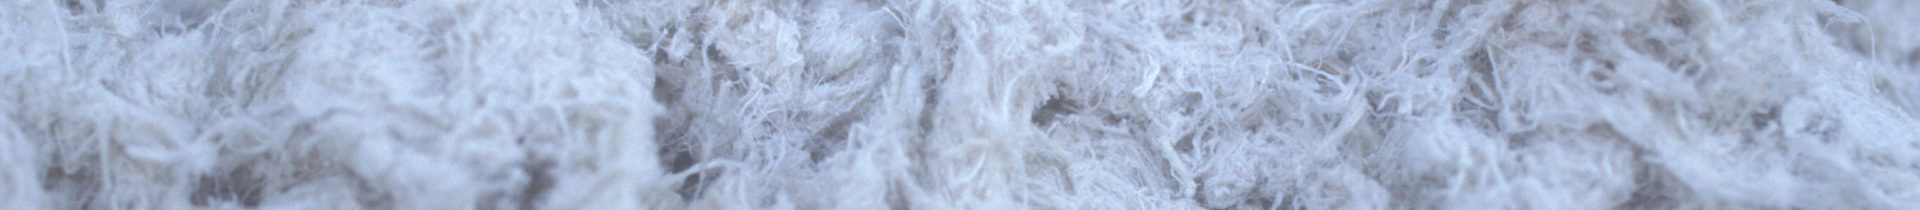 asbestos fiber